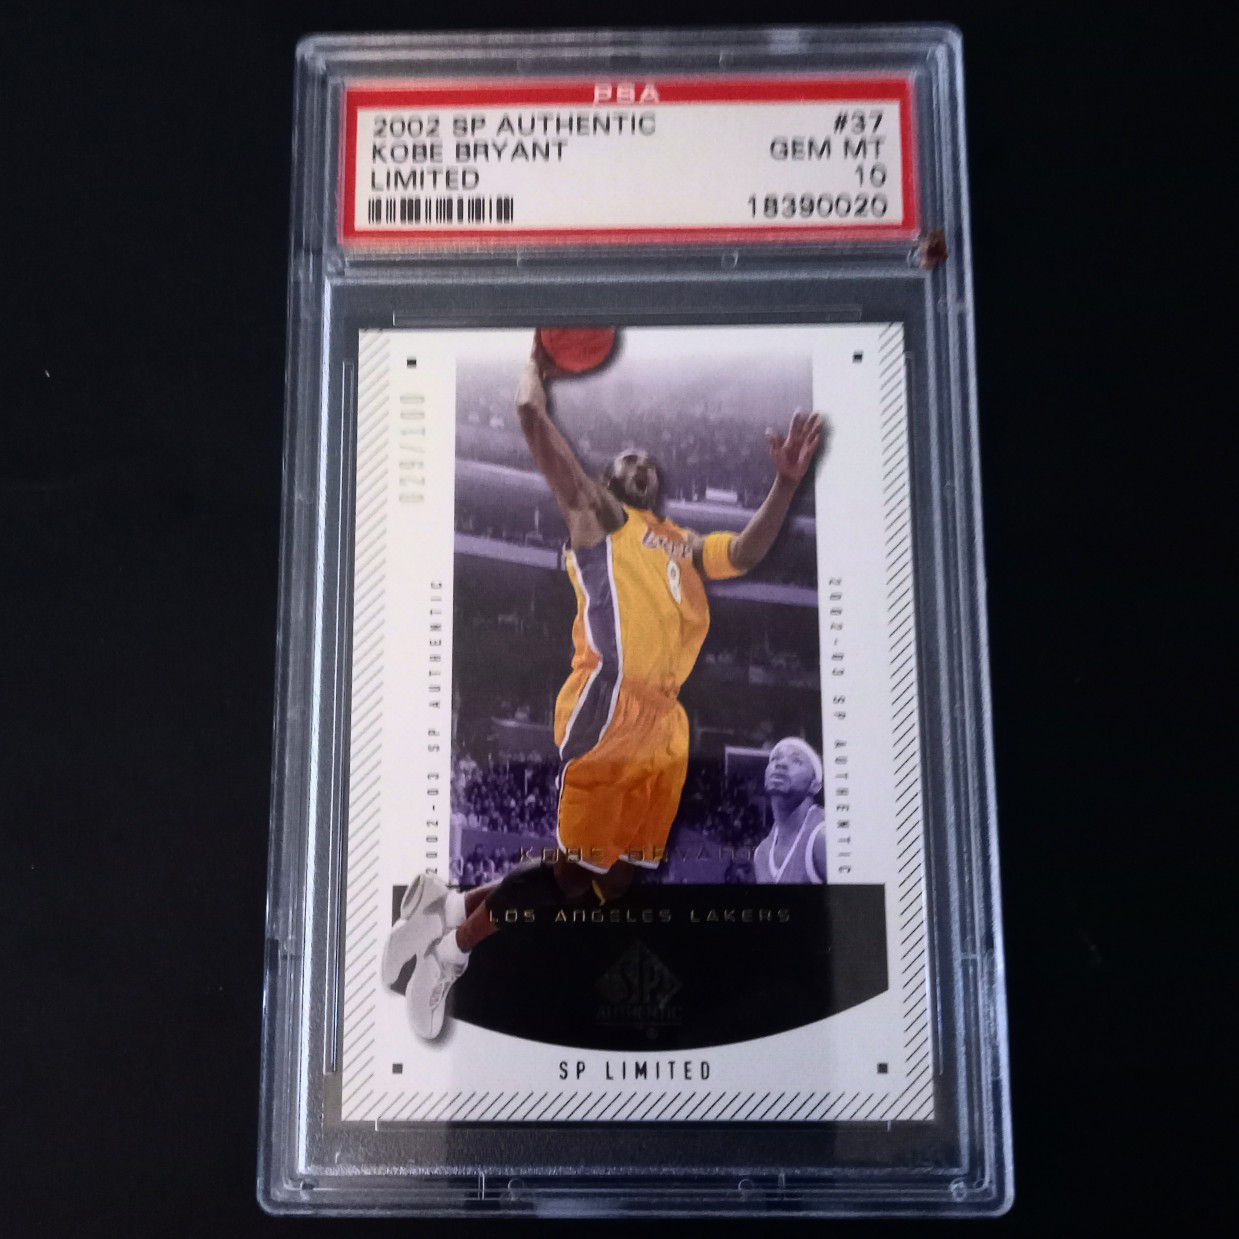 2002SP Authentic Kobe Bryant limited Edition Gem Mint 10